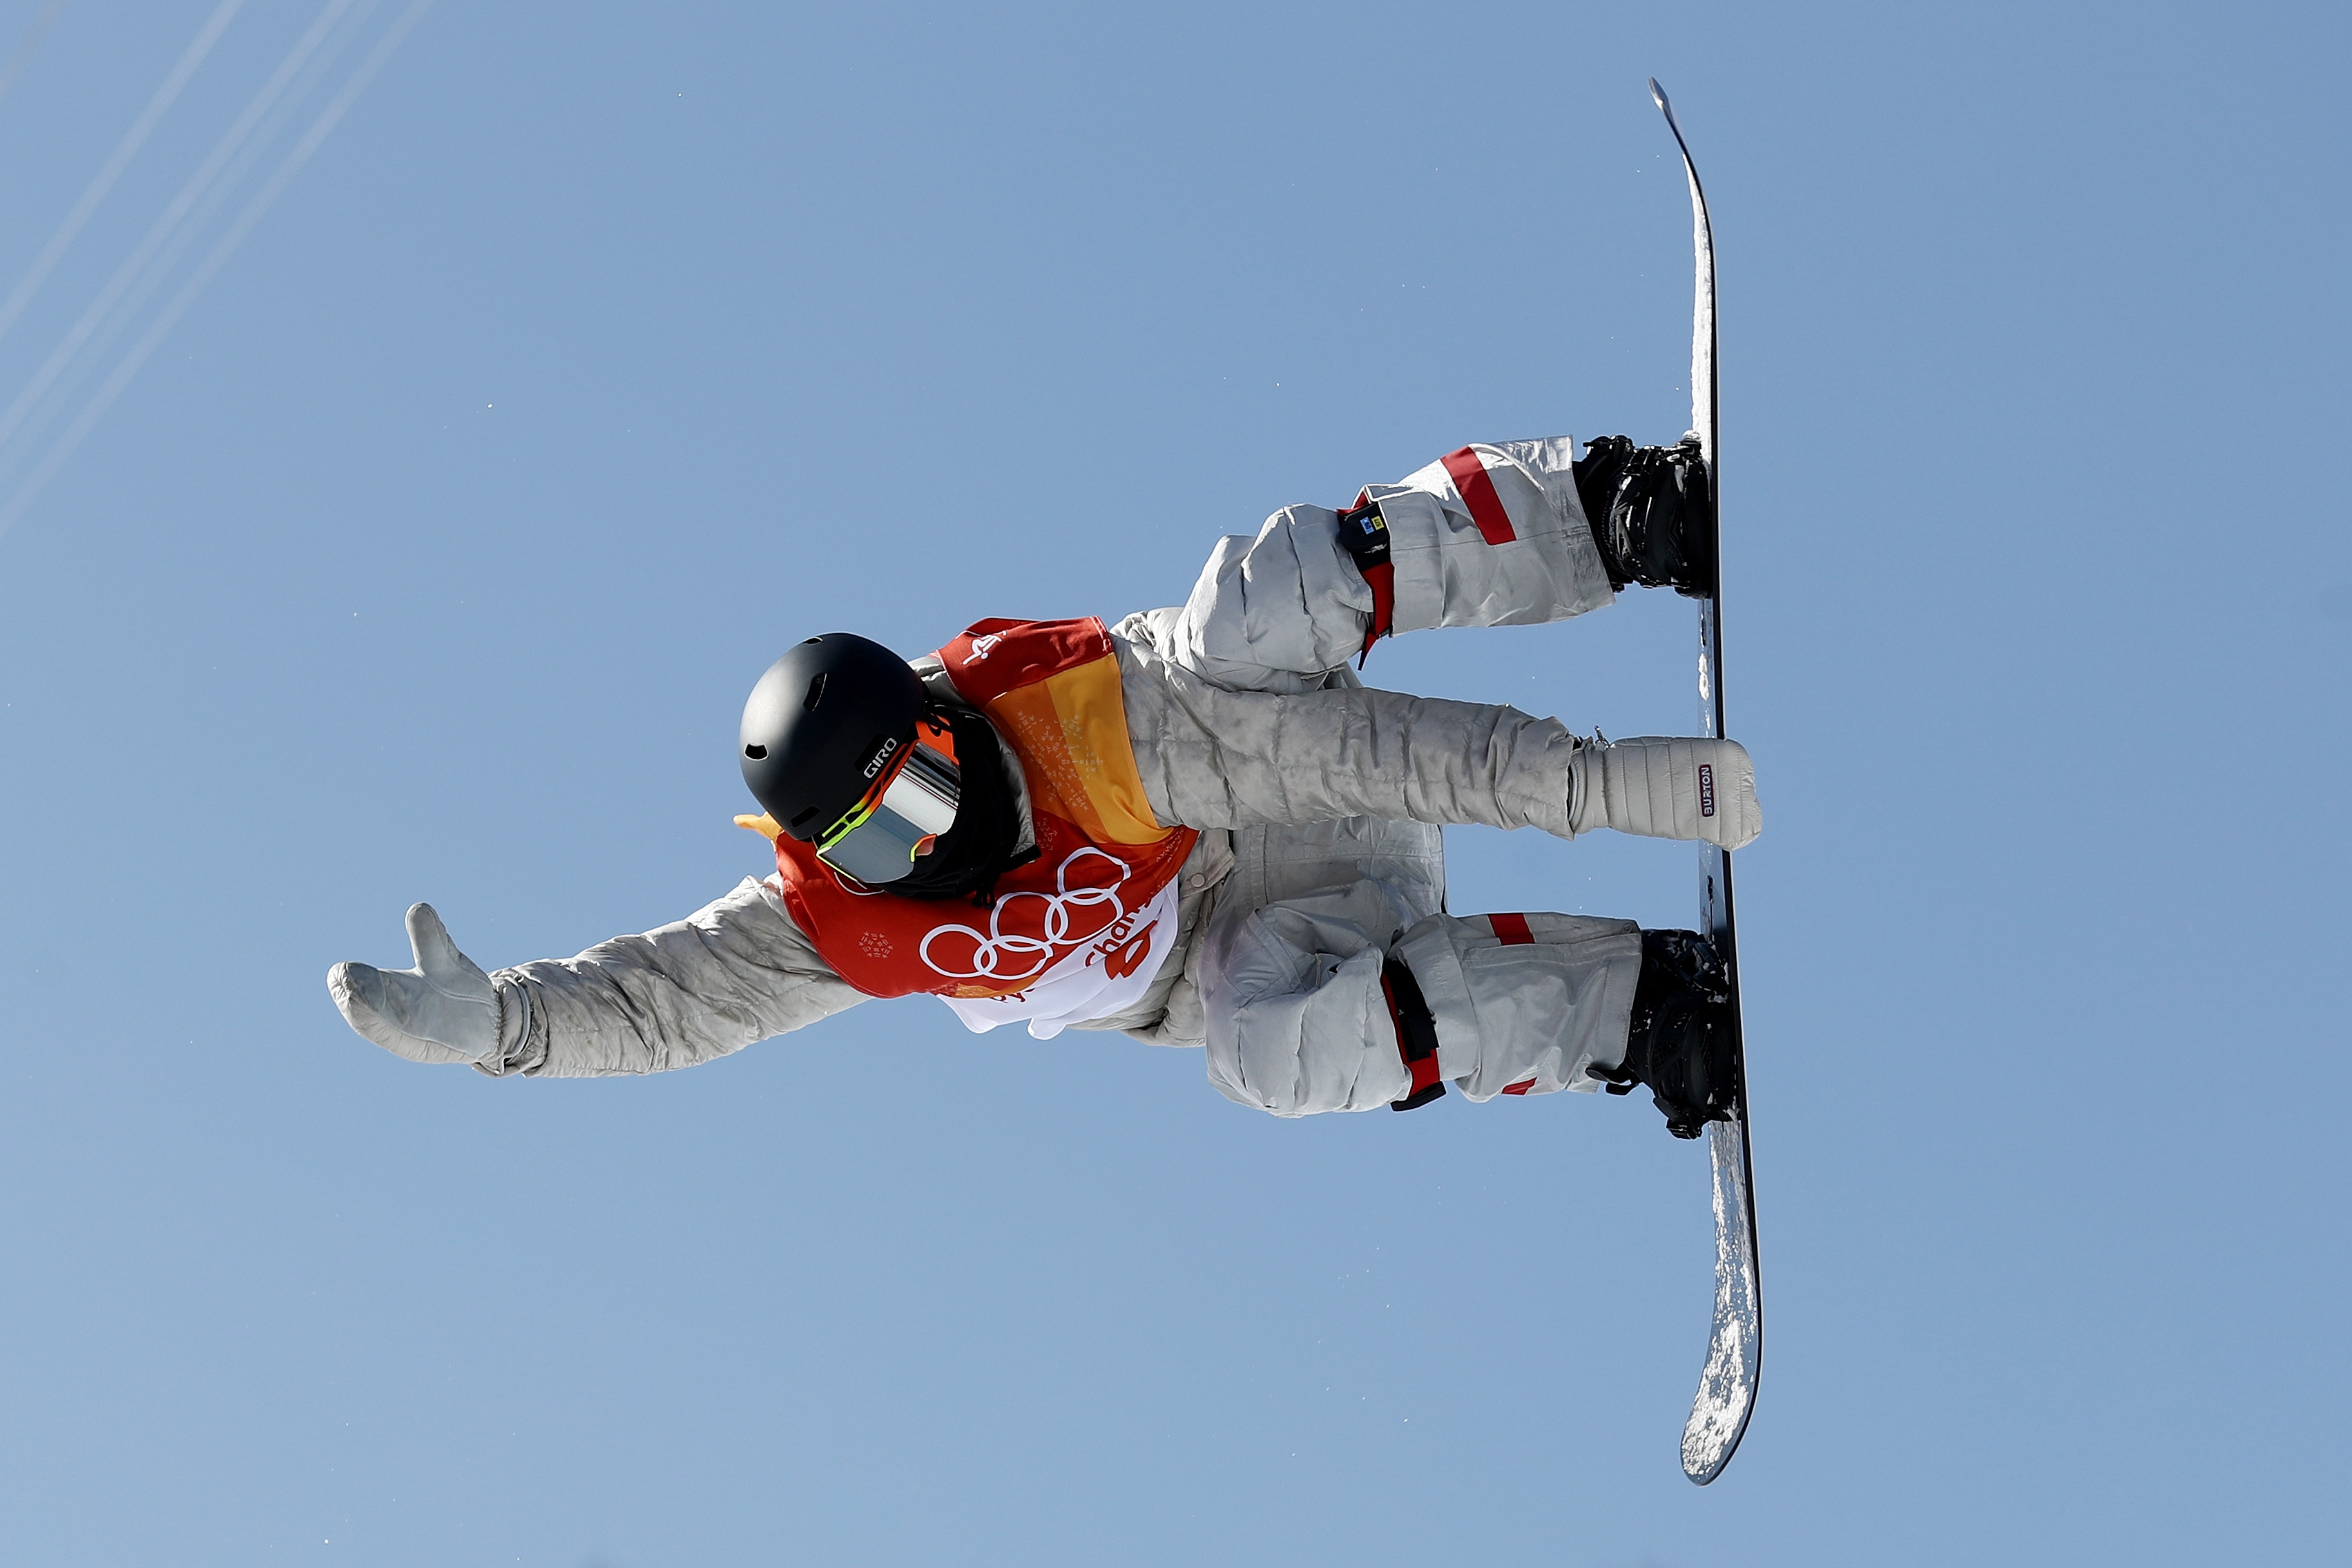 Shaun White USA Halfpipe Snowboarding Finals World Cup Colorado